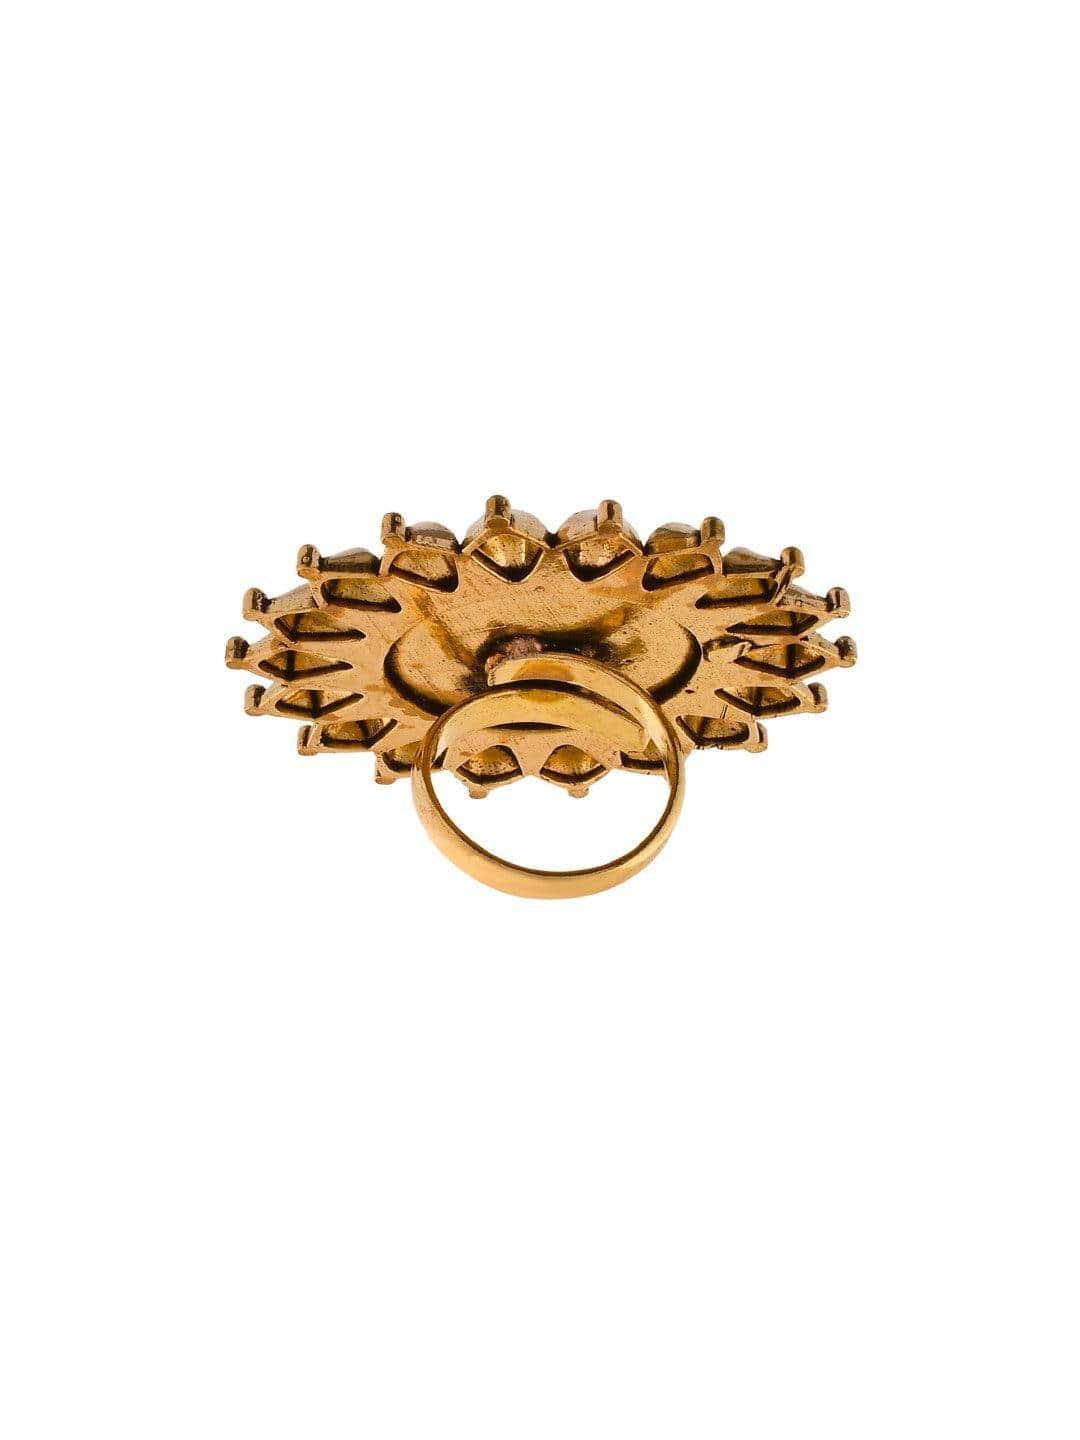 Ishhaara Sunny Leone In Oxidised Golden Chrysathrus Ring